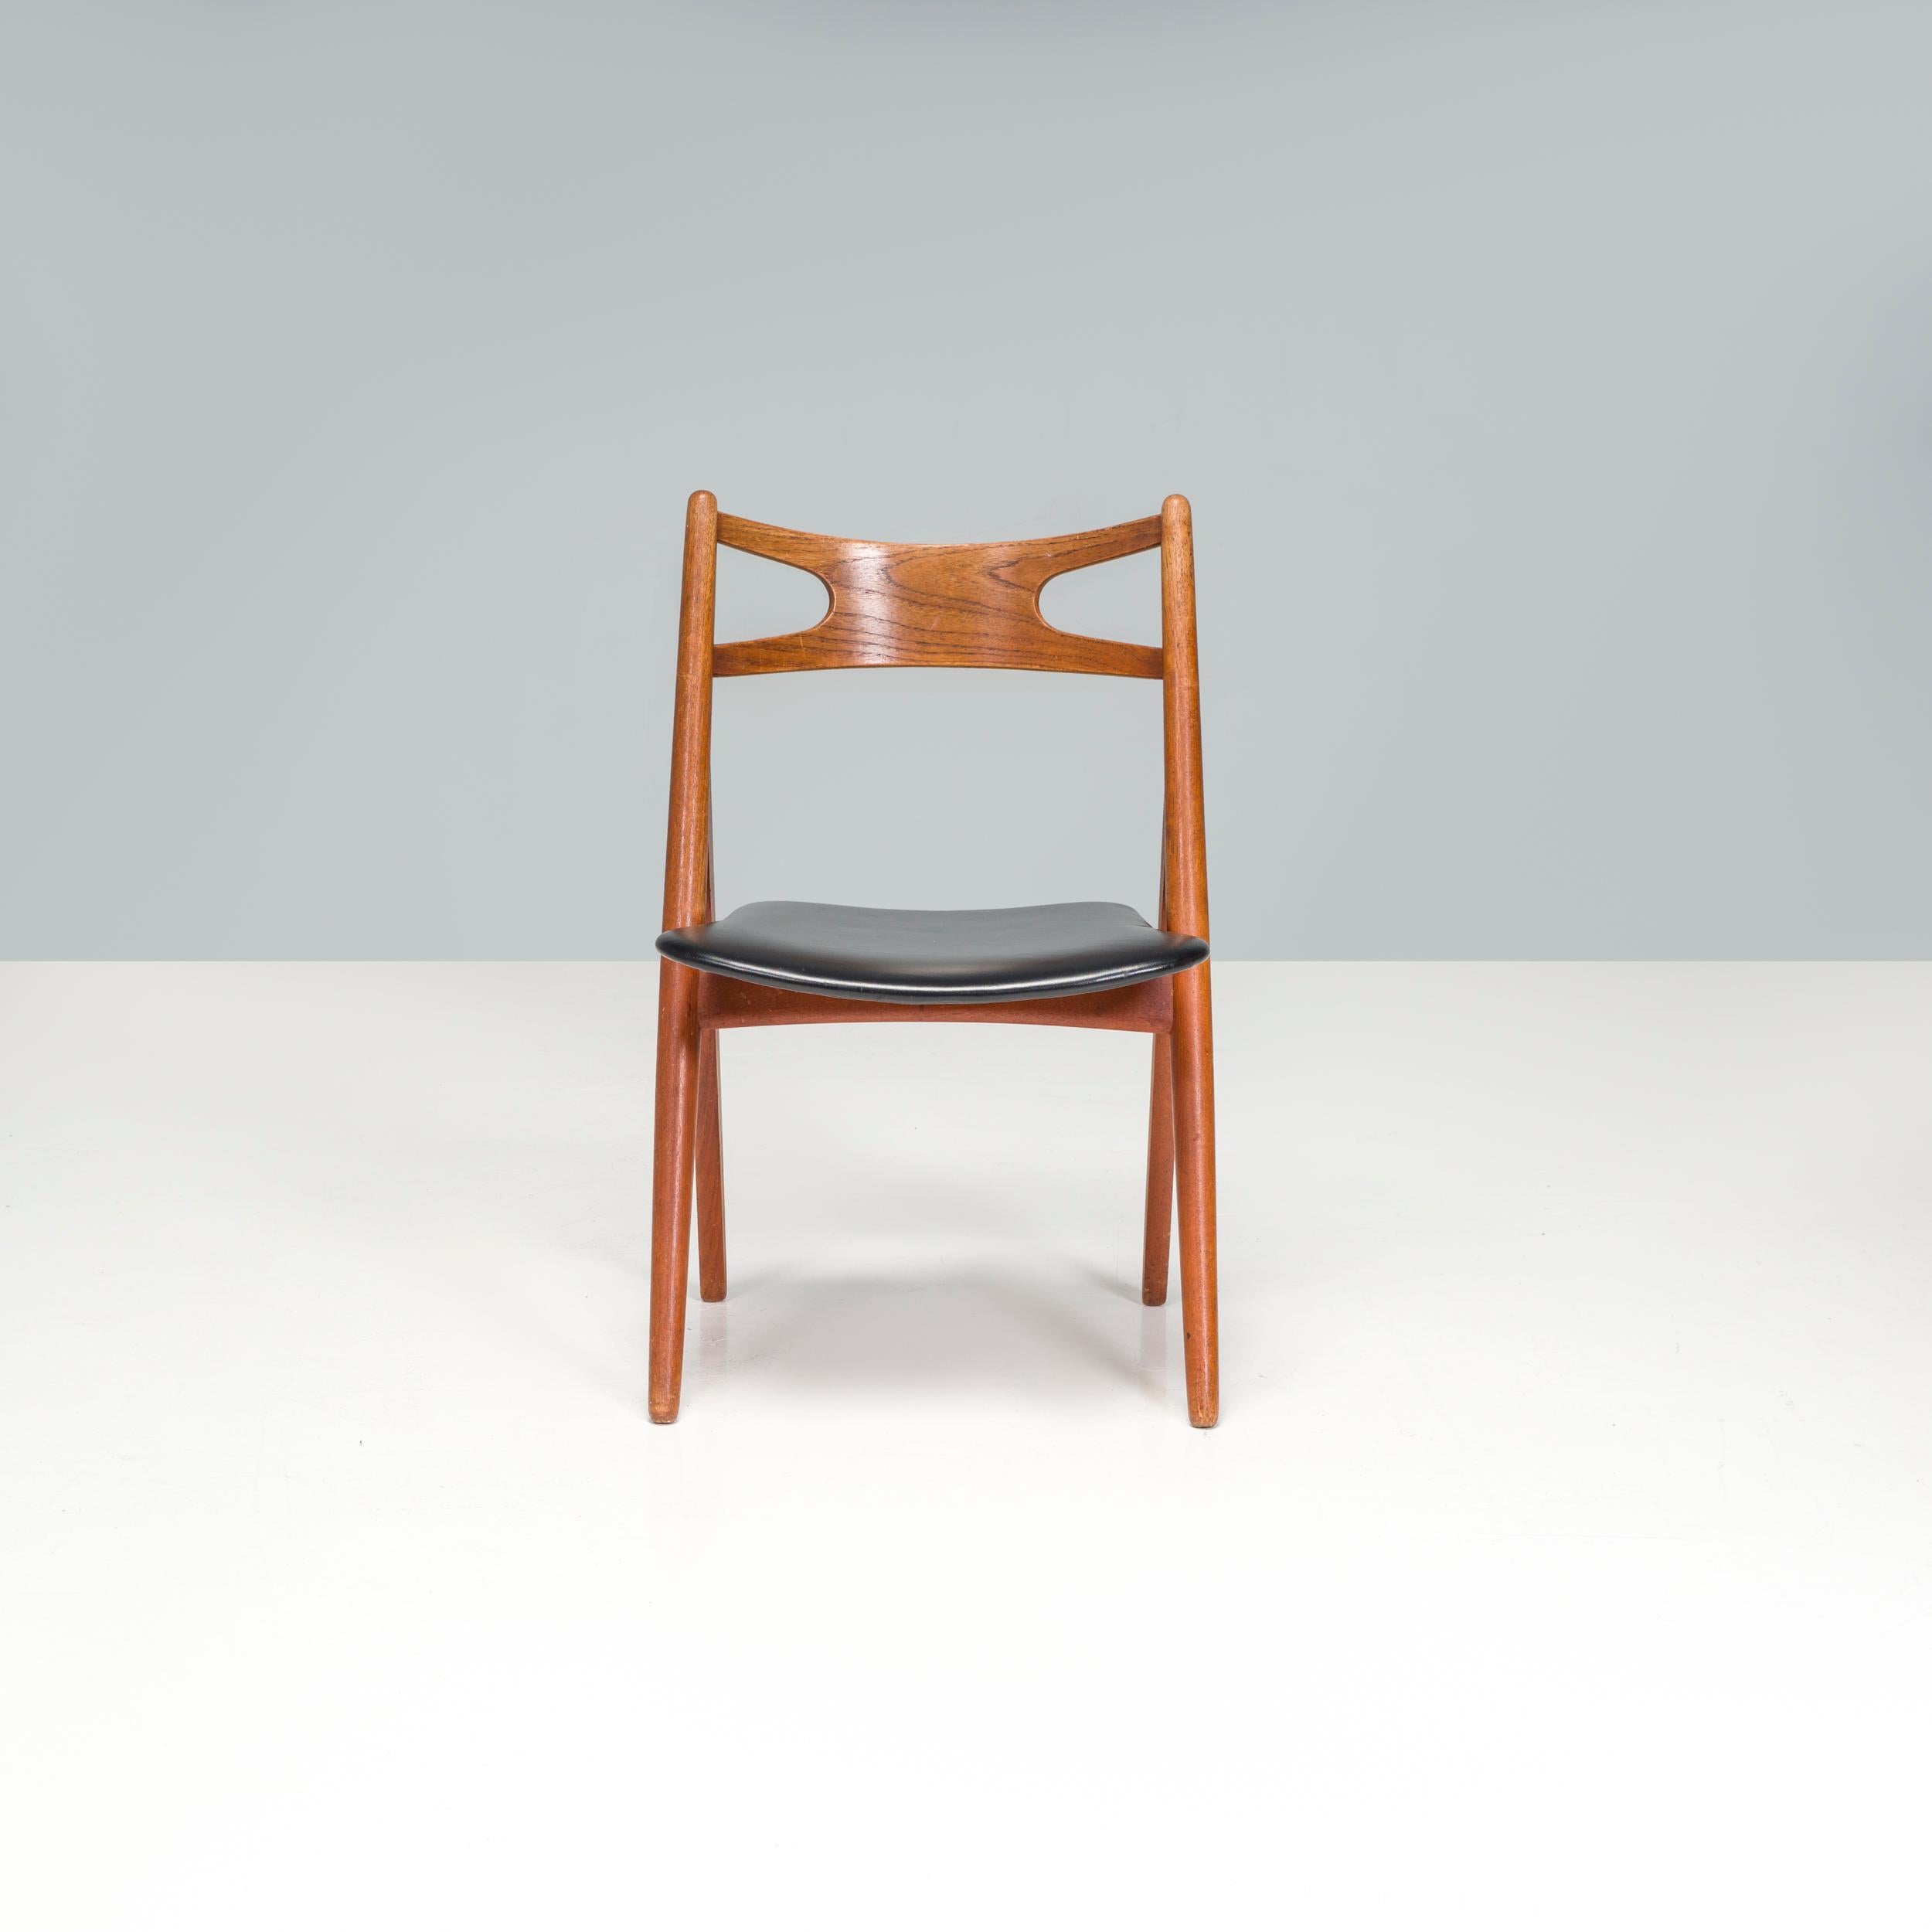 Hans J. Wegner: 4er-Set Sawbuck-Stühle aus Teakholz und schwarzem Leder CH29P, 1960er Jahre (Mitte des 20. Jahrhunderts) im Angebot